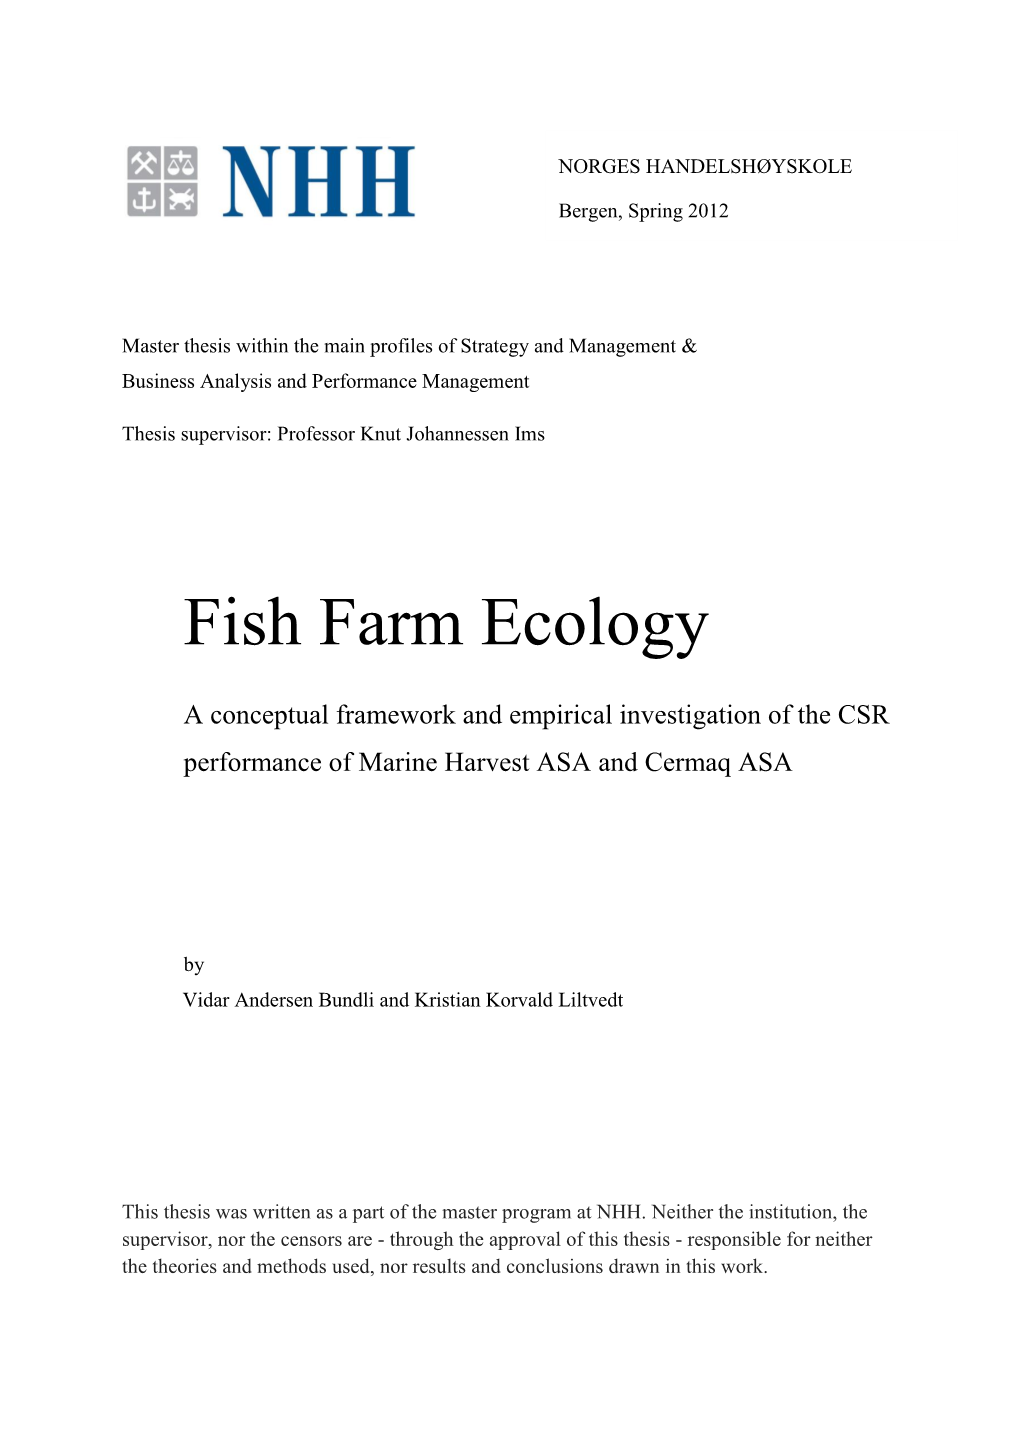 Fish Farm Ecology